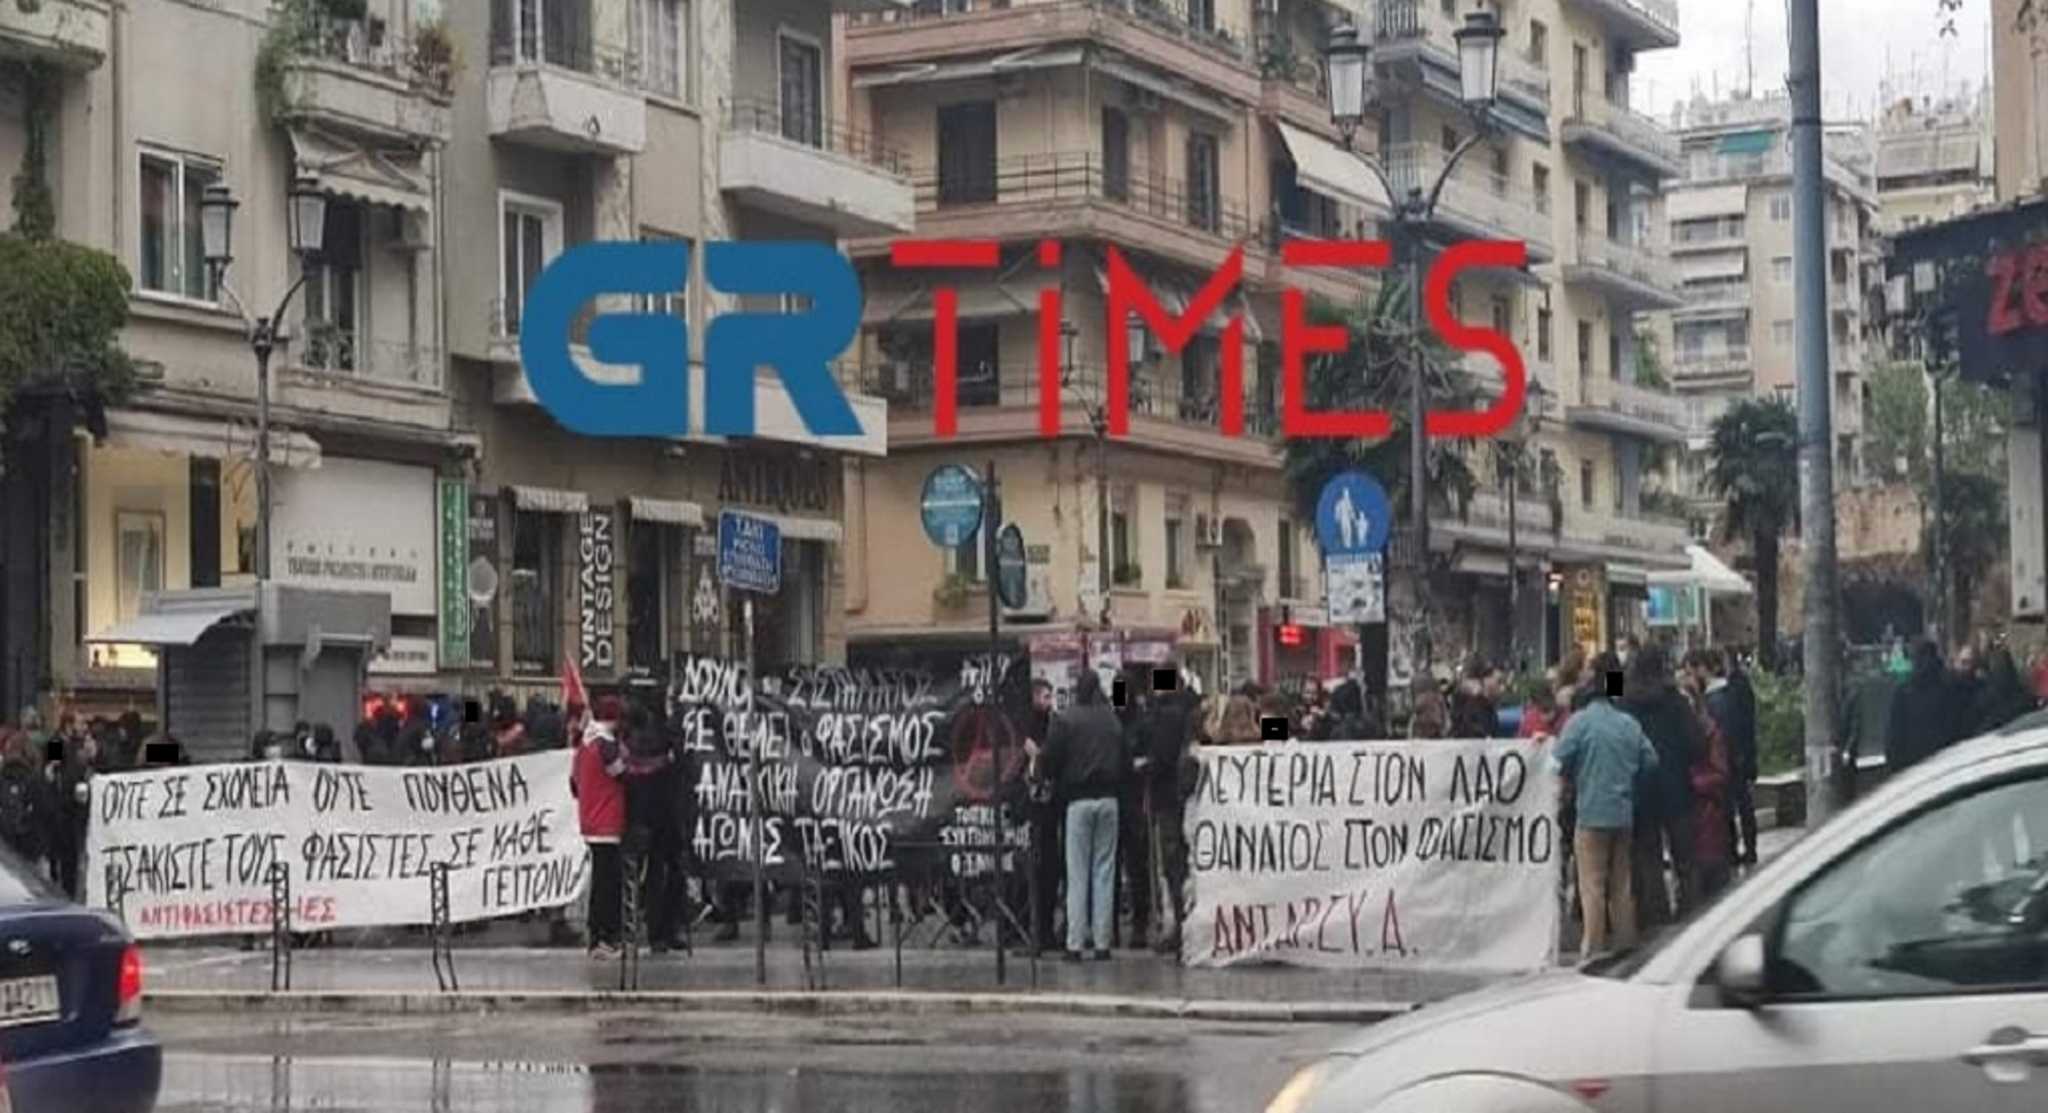 antifasistikisygkentrosi Thessaloniki grtimes 10 10 2021 2048x1113 1